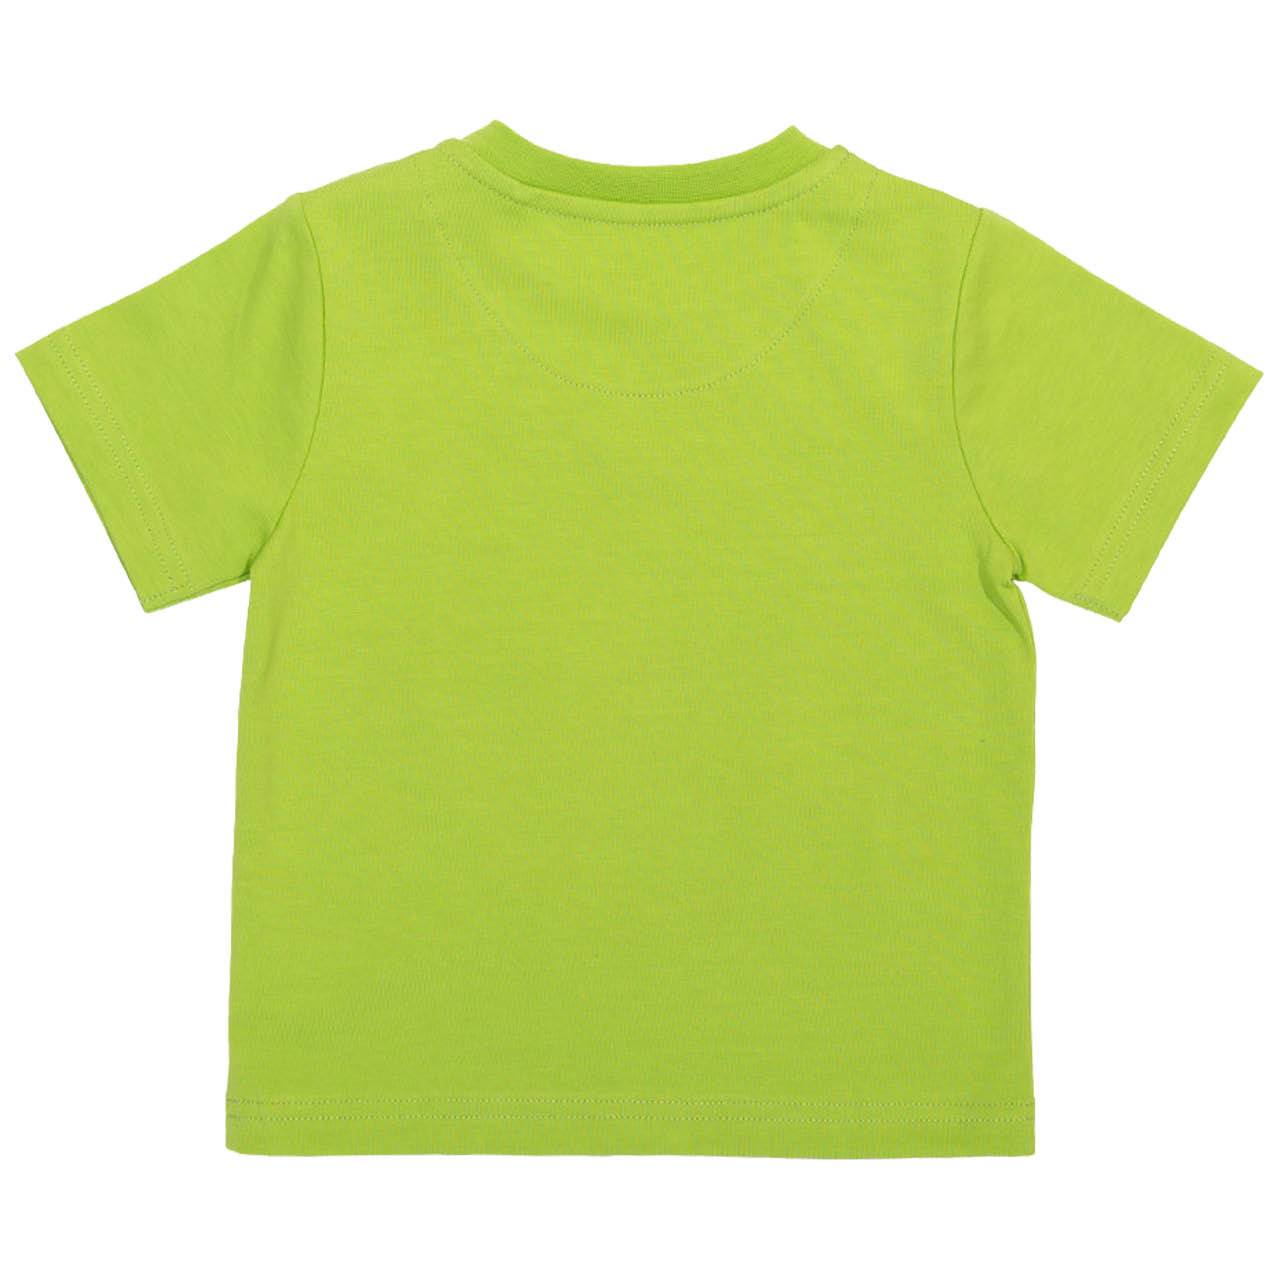 Grünes T-Shirt Safari-Tiere